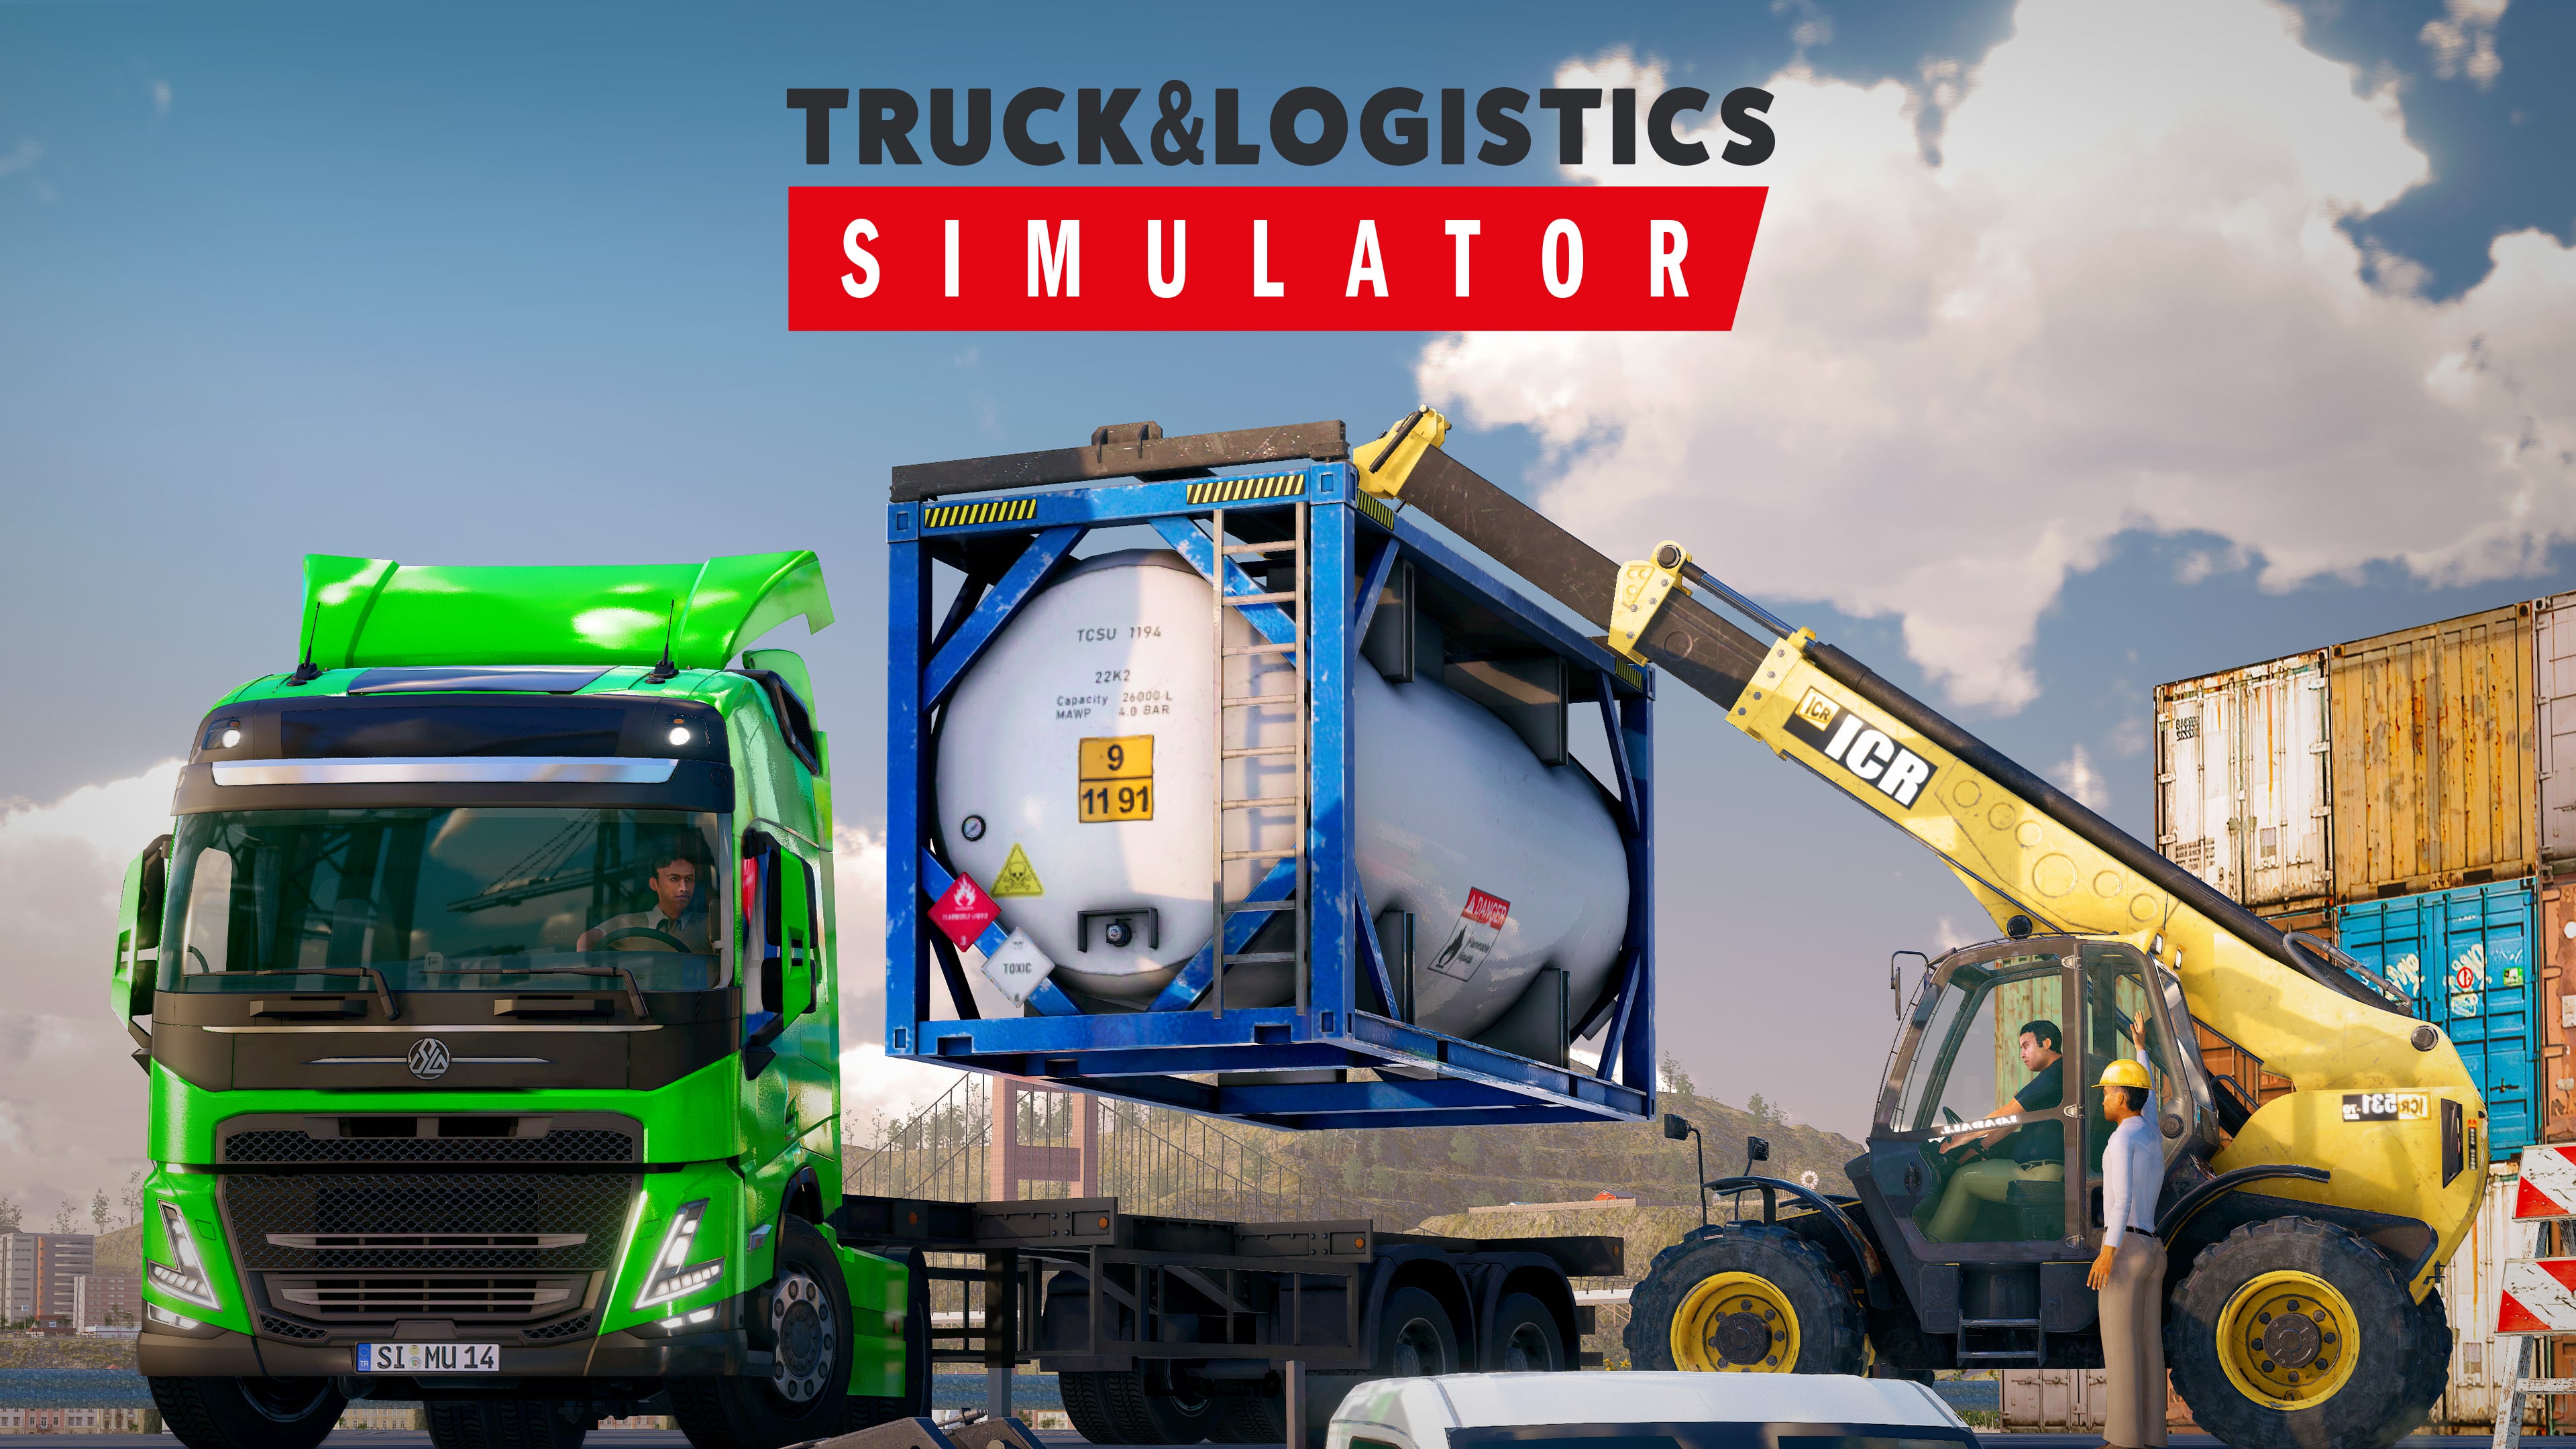 Truck & Logistics Simulator (日语, 简体中文, 英语)